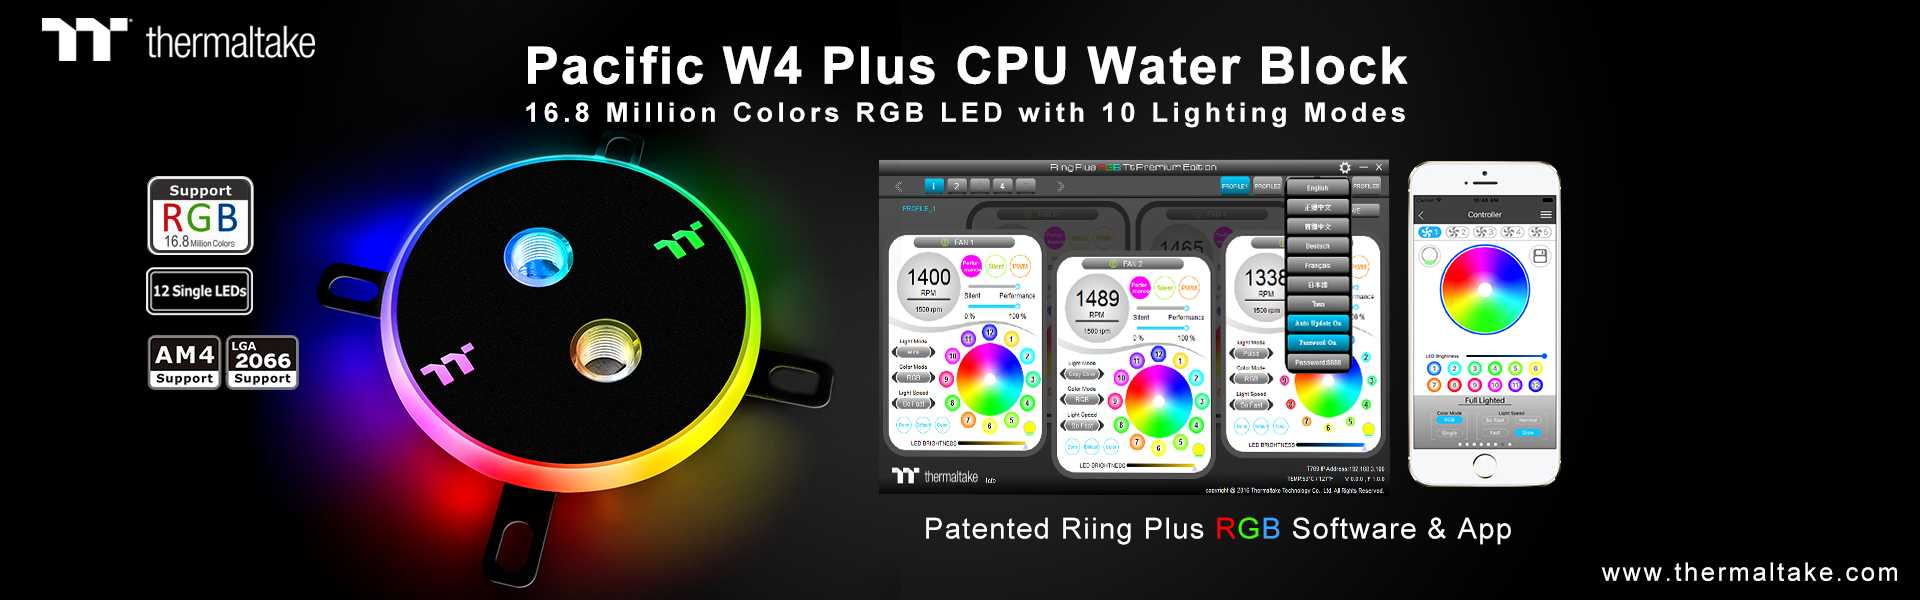 Thermaltake เปิดตัวบล๊อกชุดน้ำ Pacific W4 Plus CPU Water Block ที่มีสีแสดงผลถึง 16.8 ล้านสี LED RGB รุ่นใหม่ล่าสุด